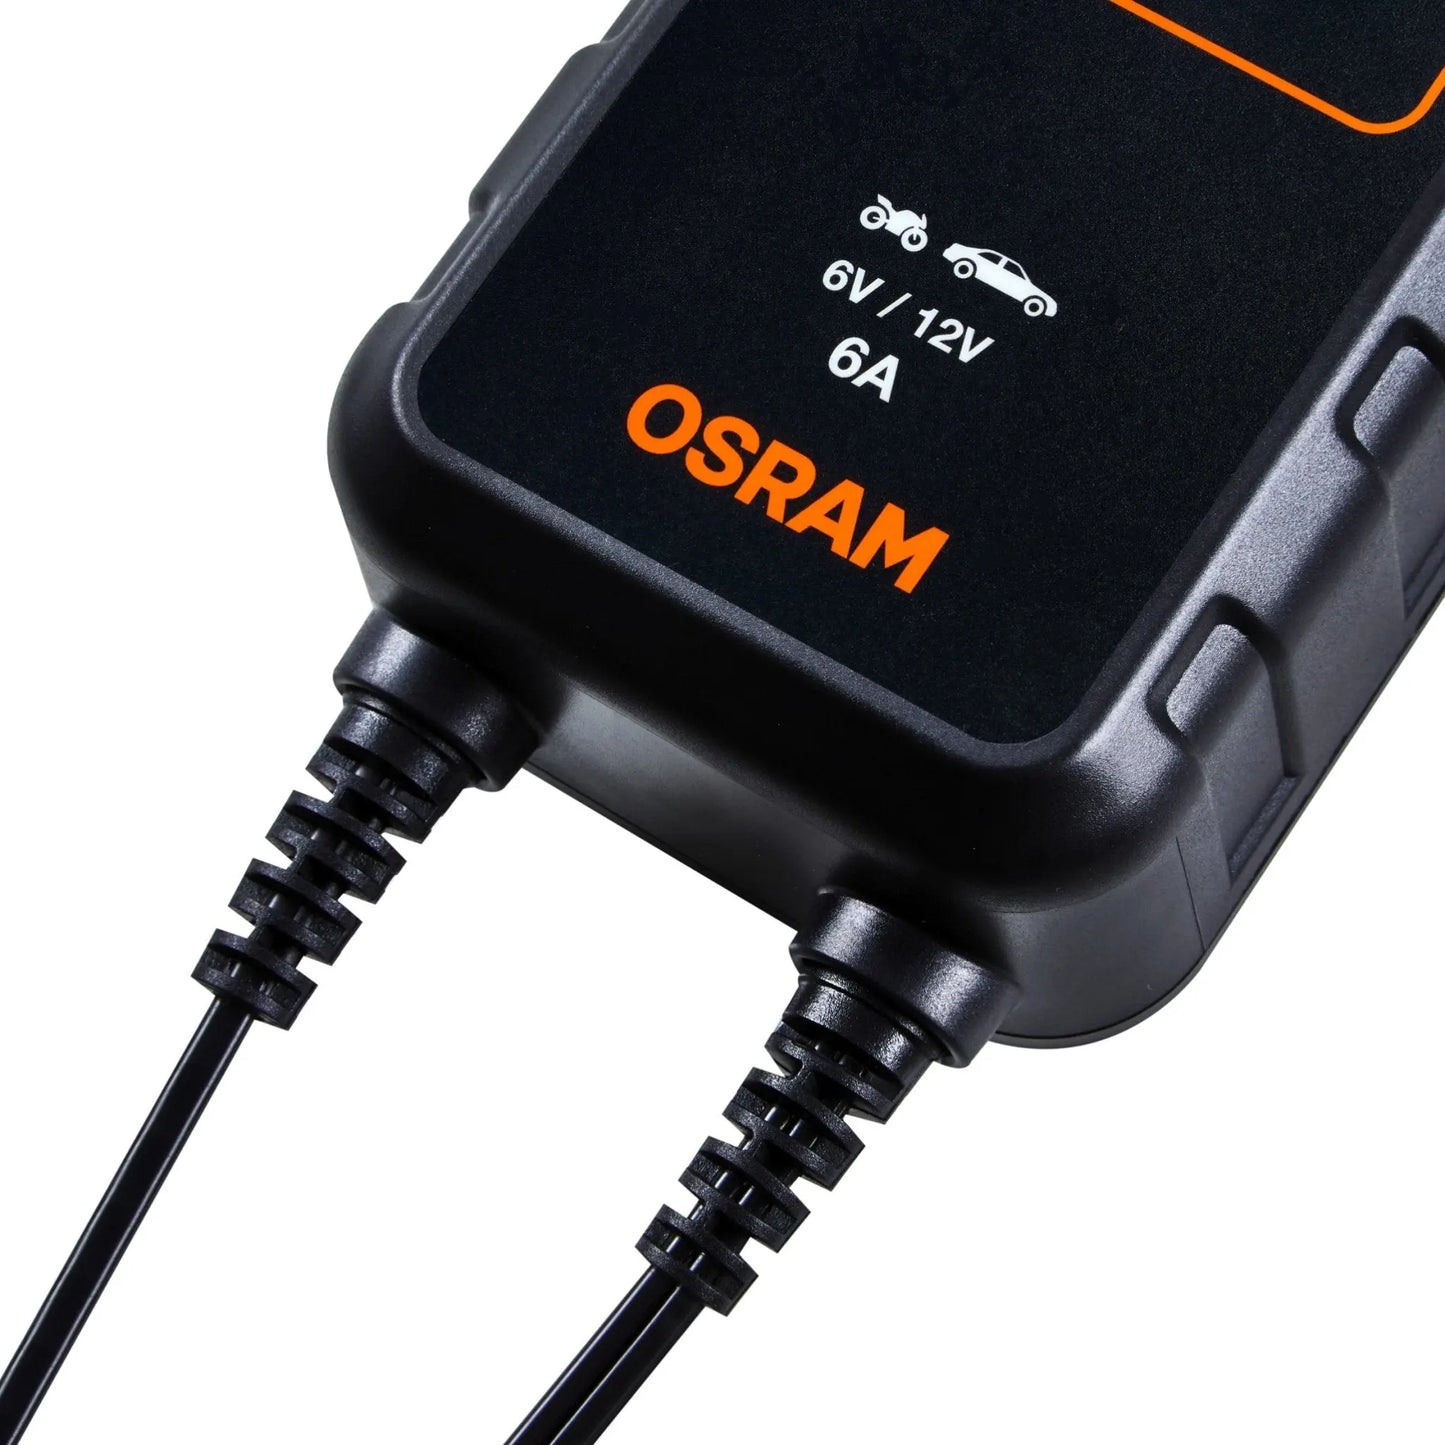 BATTERYcharge 906 Intelligentes Batterielade- und Batteriewartungsgerät 1St. OSRAM - Samsuns Group